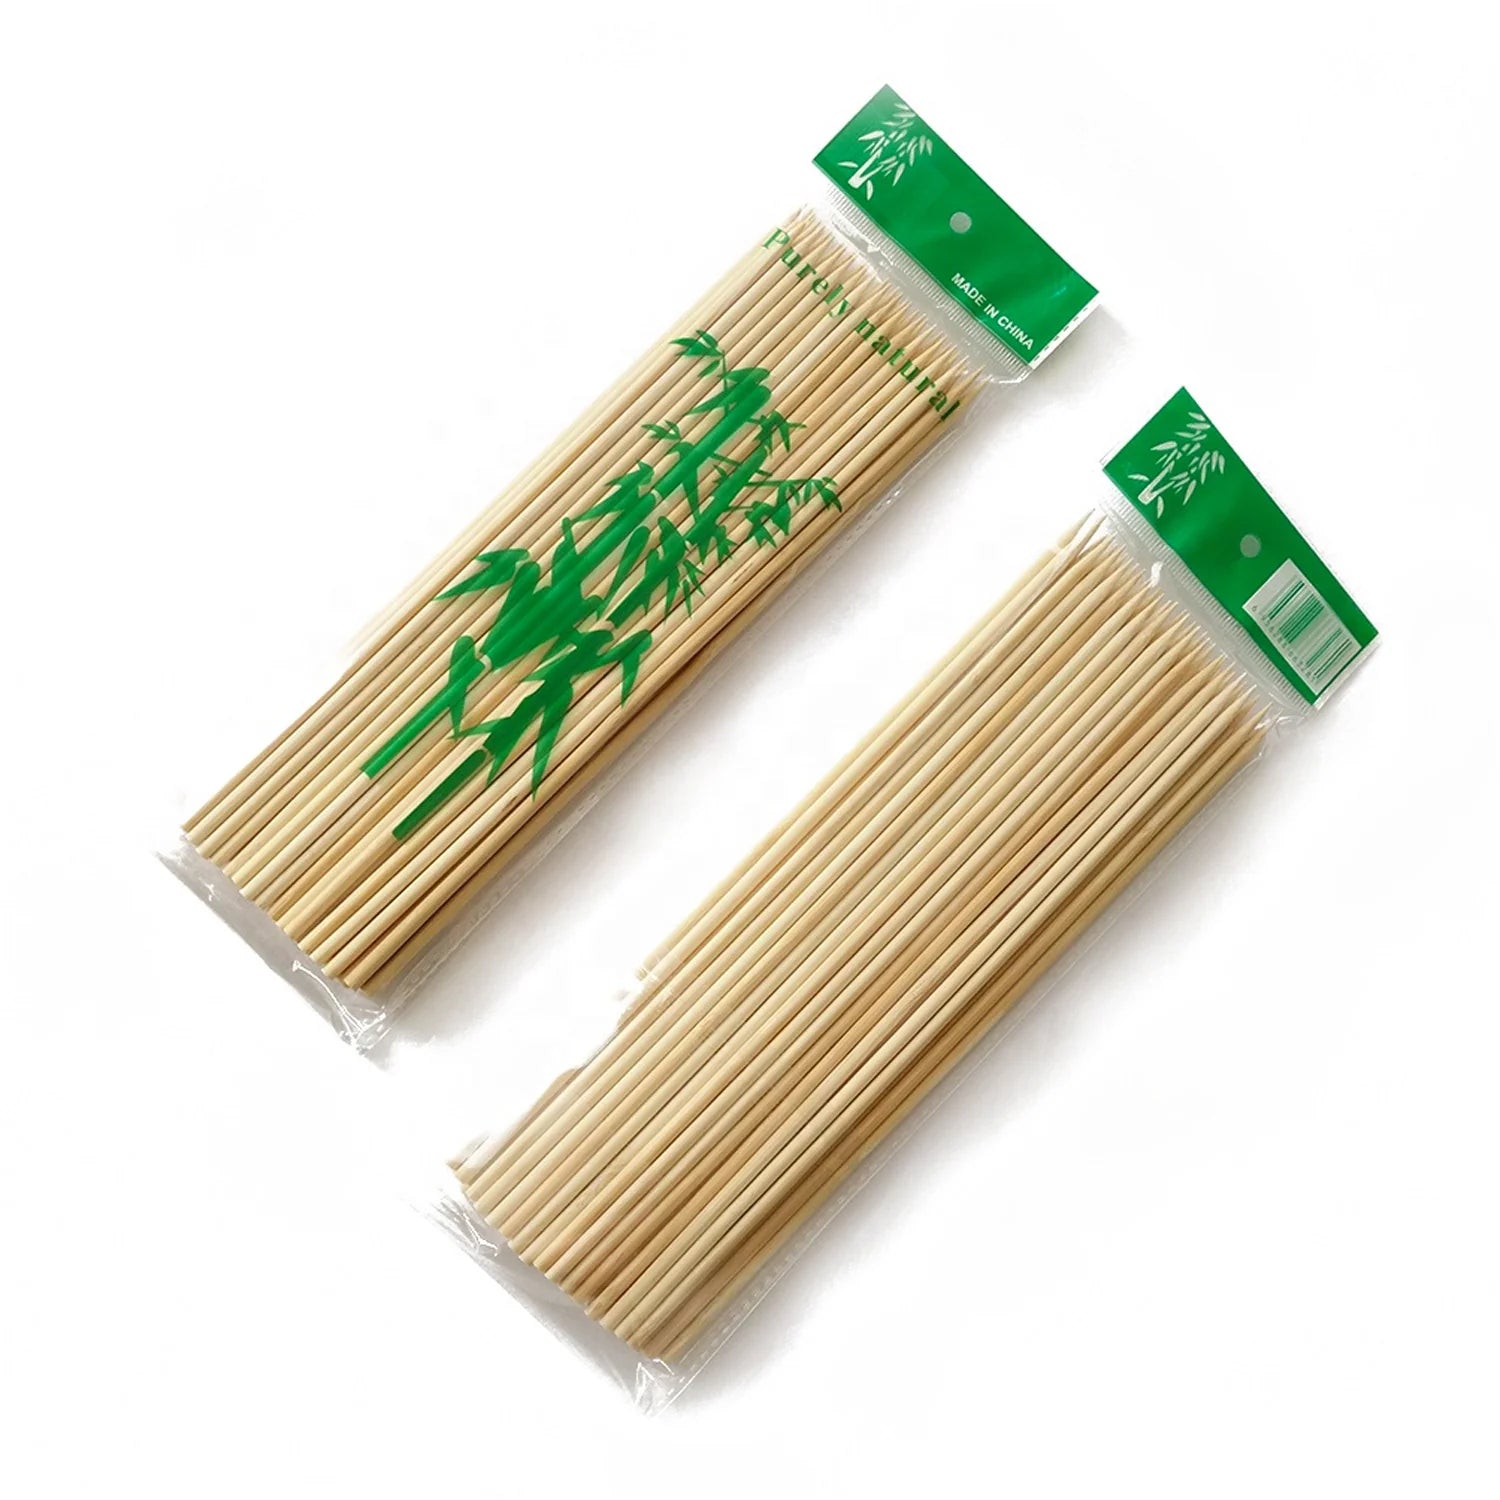 Natural Bamboo Sticks BBQ Skewers-100pcs  OnlyOneStopShop   